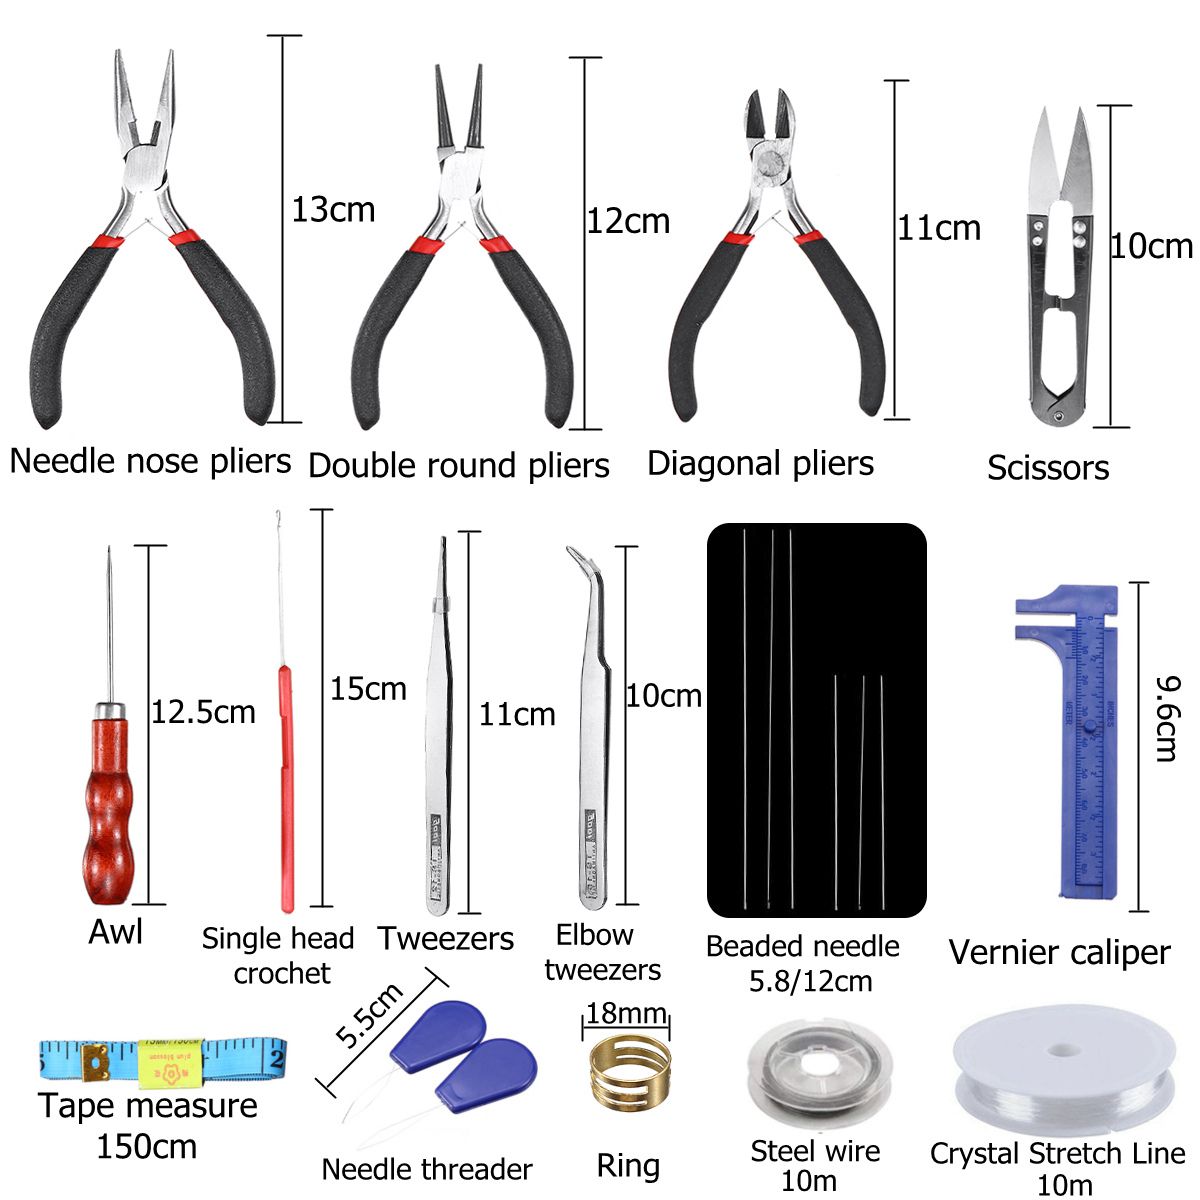 22Pcs-Jewelry-Making-Tools-Repair-Kit-Jewelry-Pliers-Beading-Wire-Set-DIY-Craft-1713659